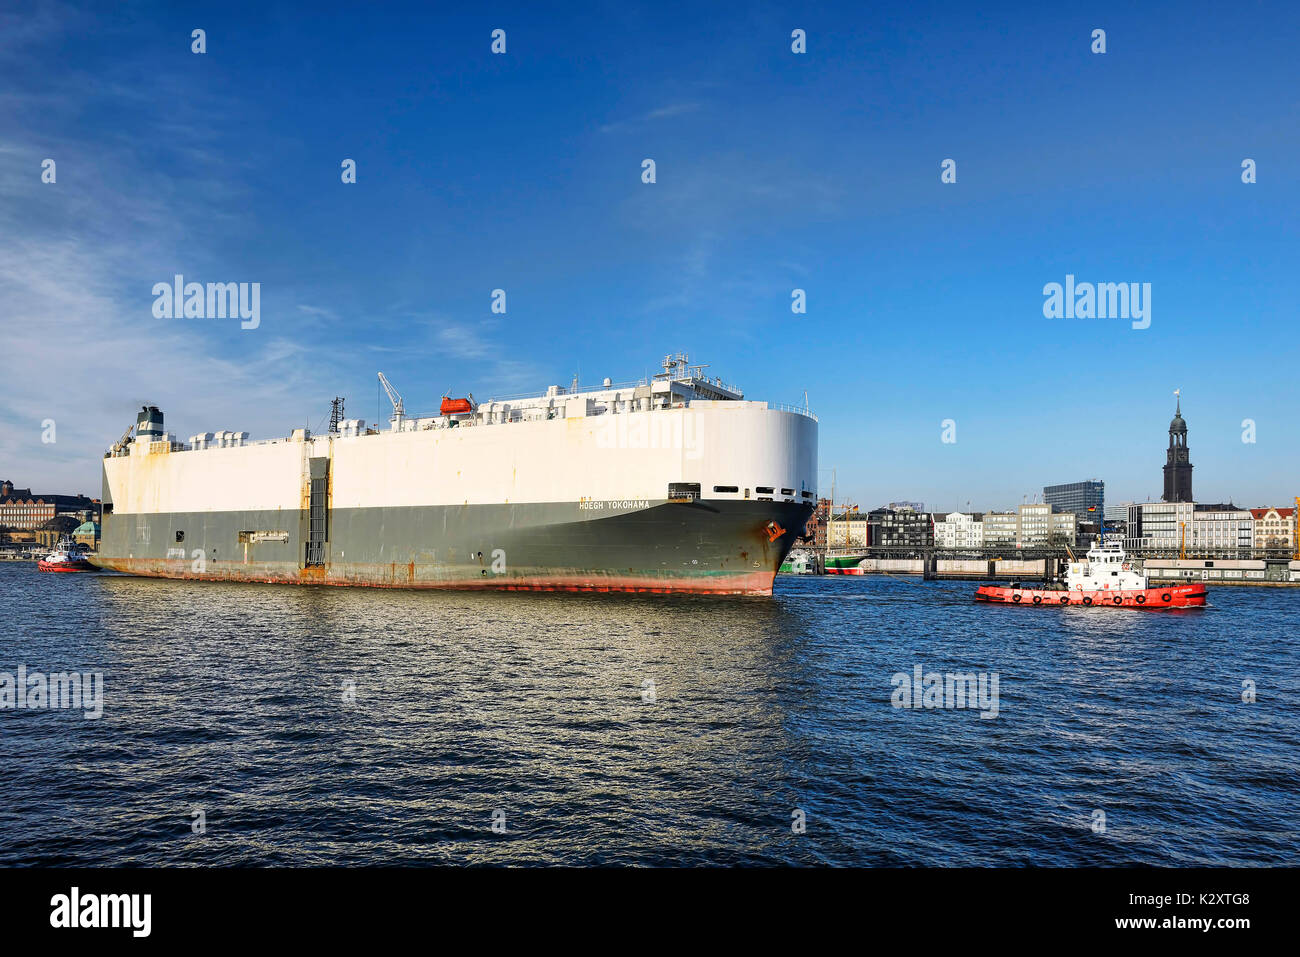 Trasporto veicolo nave Hoegh Yokohama nel porto di Amburgo, Germania, Europa Fahrzeugtransportschiff Hoegh Yokohama im Hamburger Hafen, Deutschland, Foto Stock